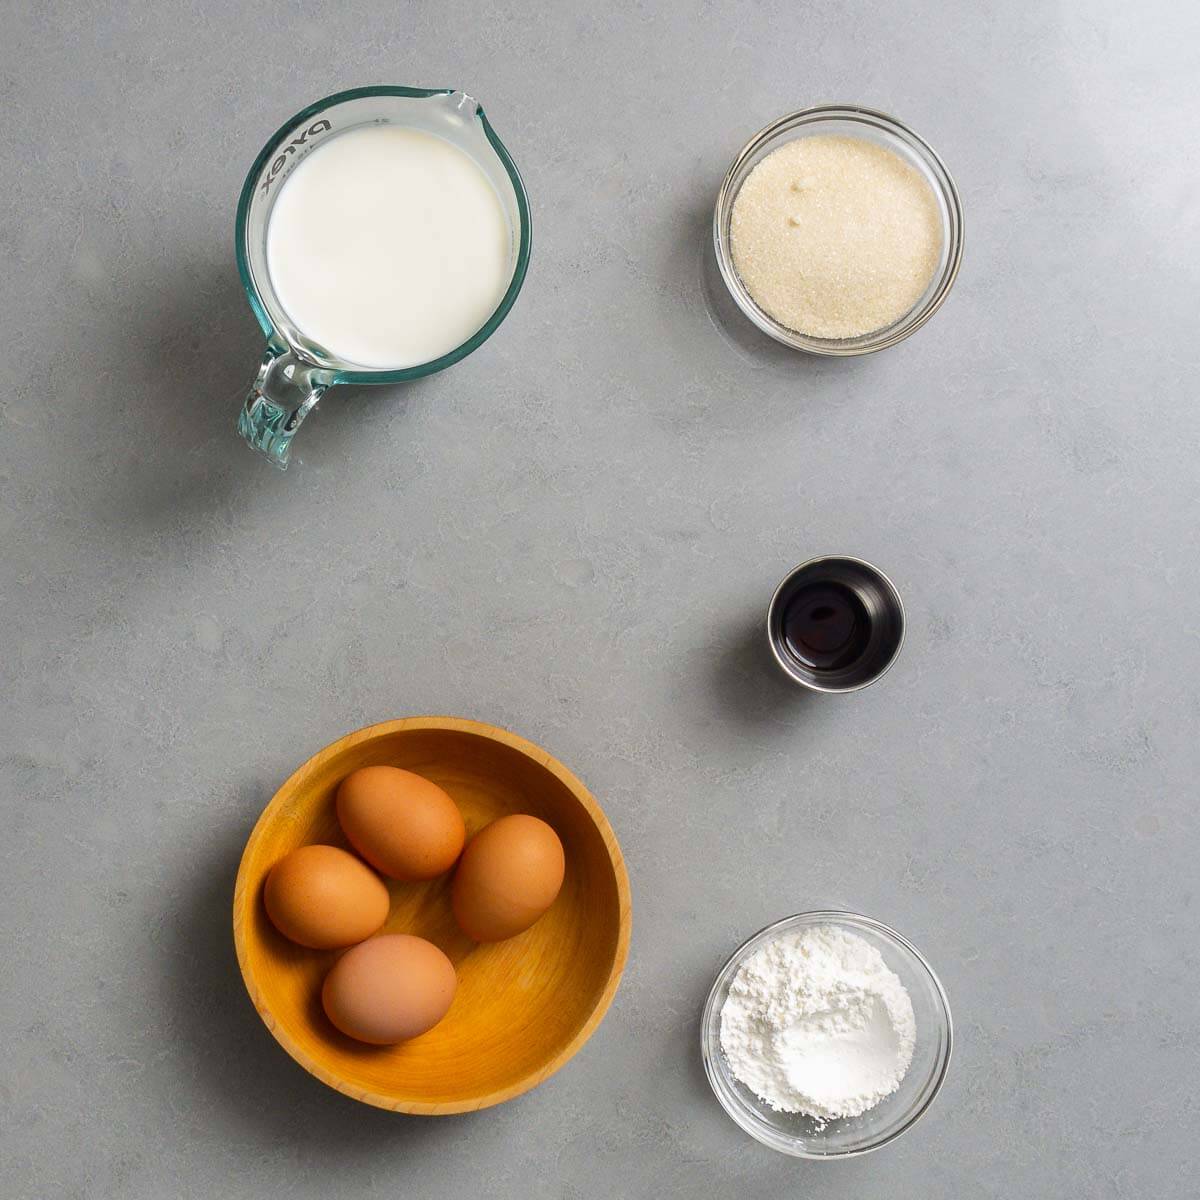 Pastry cream ingredients shown: milk, sugar, eggs, vanilla, and cornstarch.